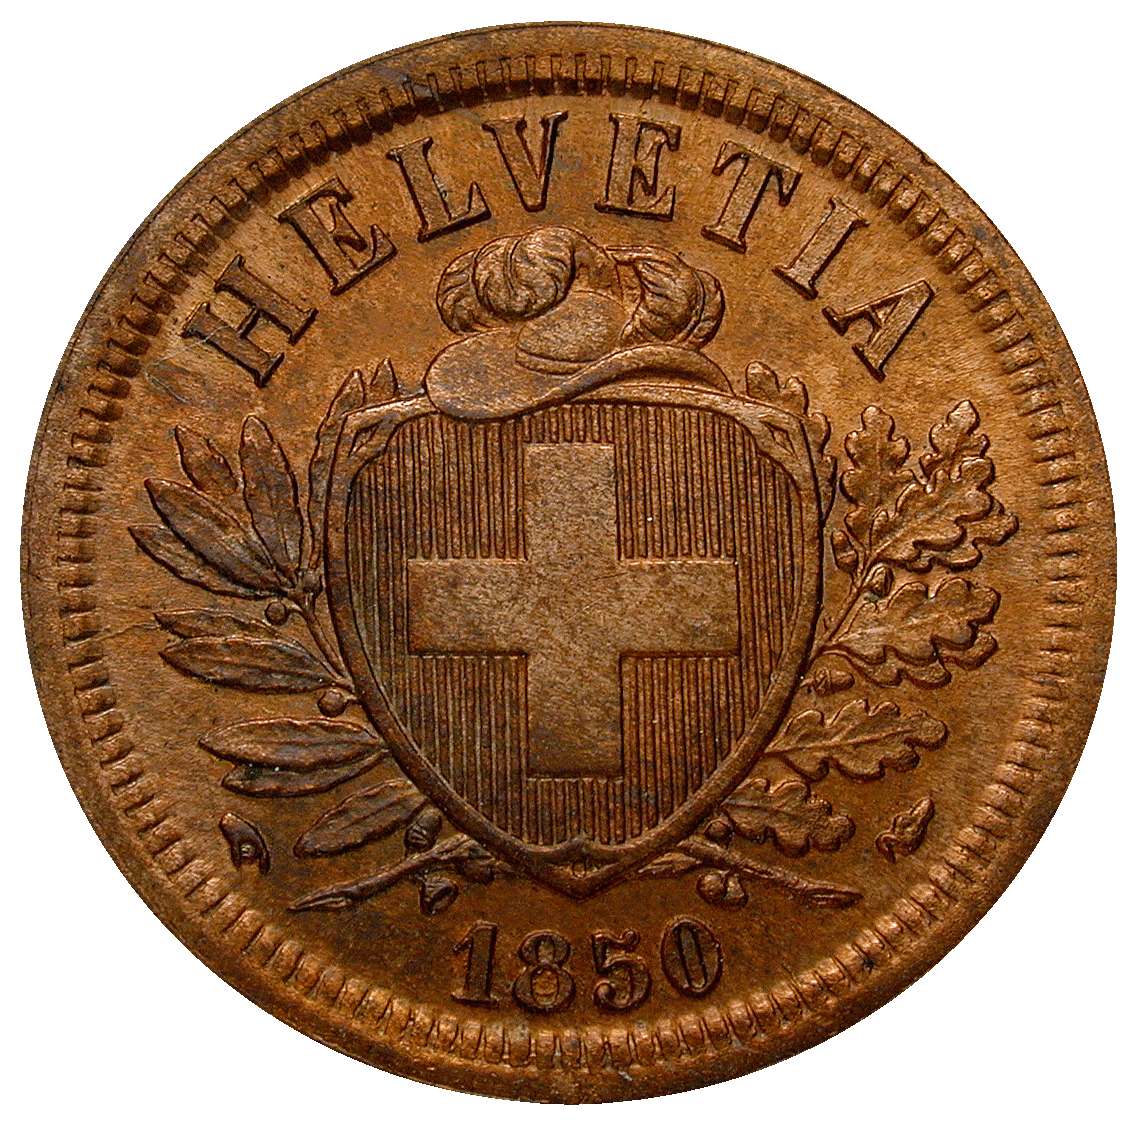 Swiss Confederation, 2 Rappen 1850 (obverse)